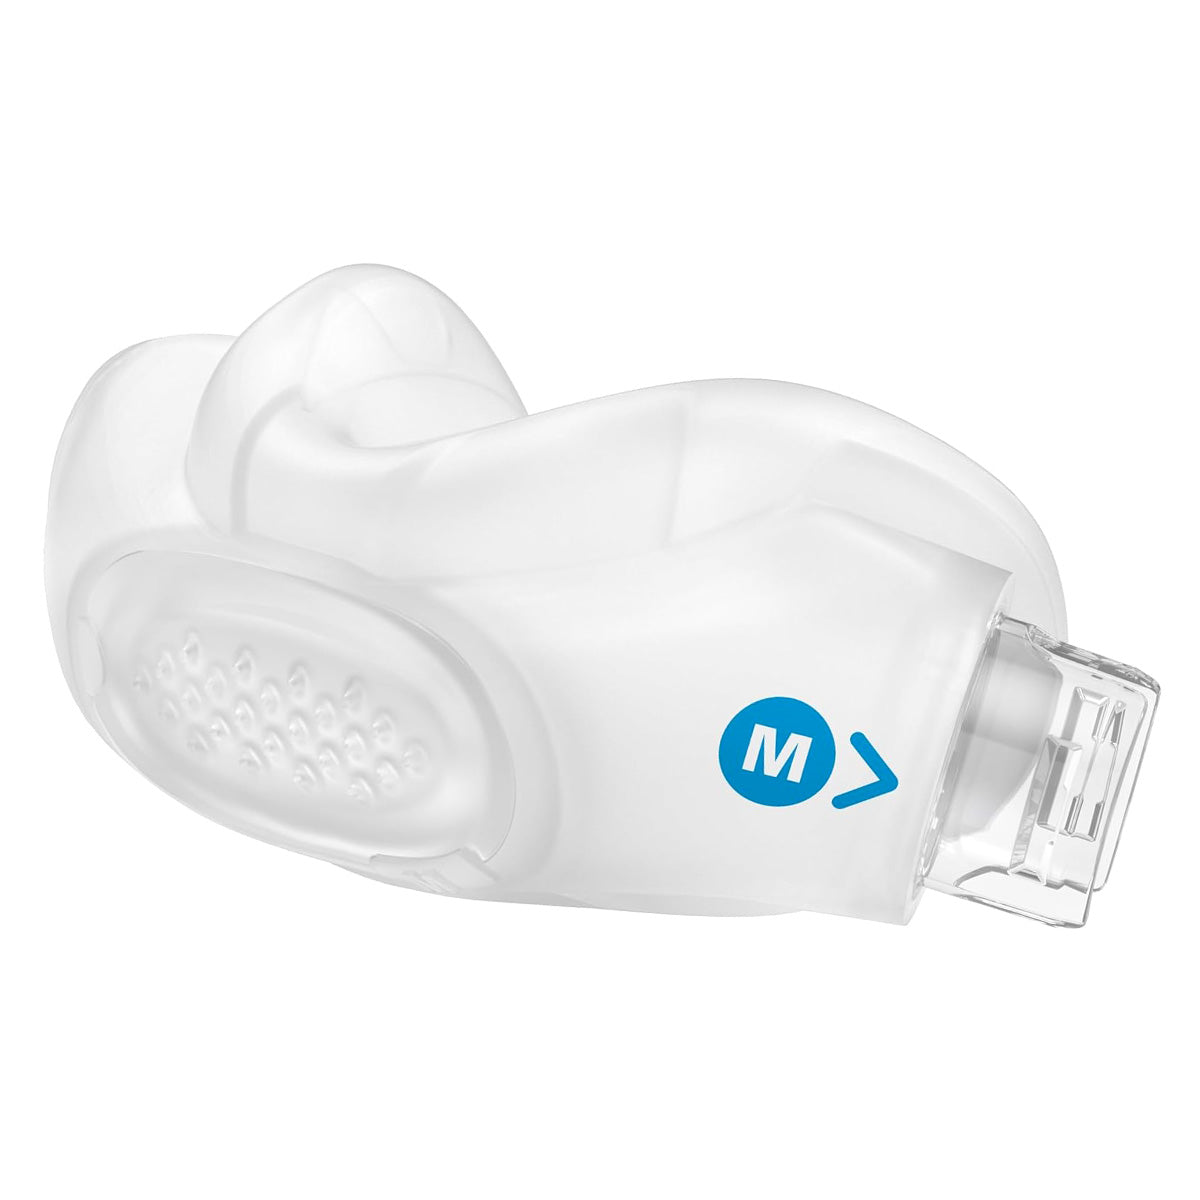 Cradle Nasal Cushion for AirFit N30i CPAP/BiLevel Masks